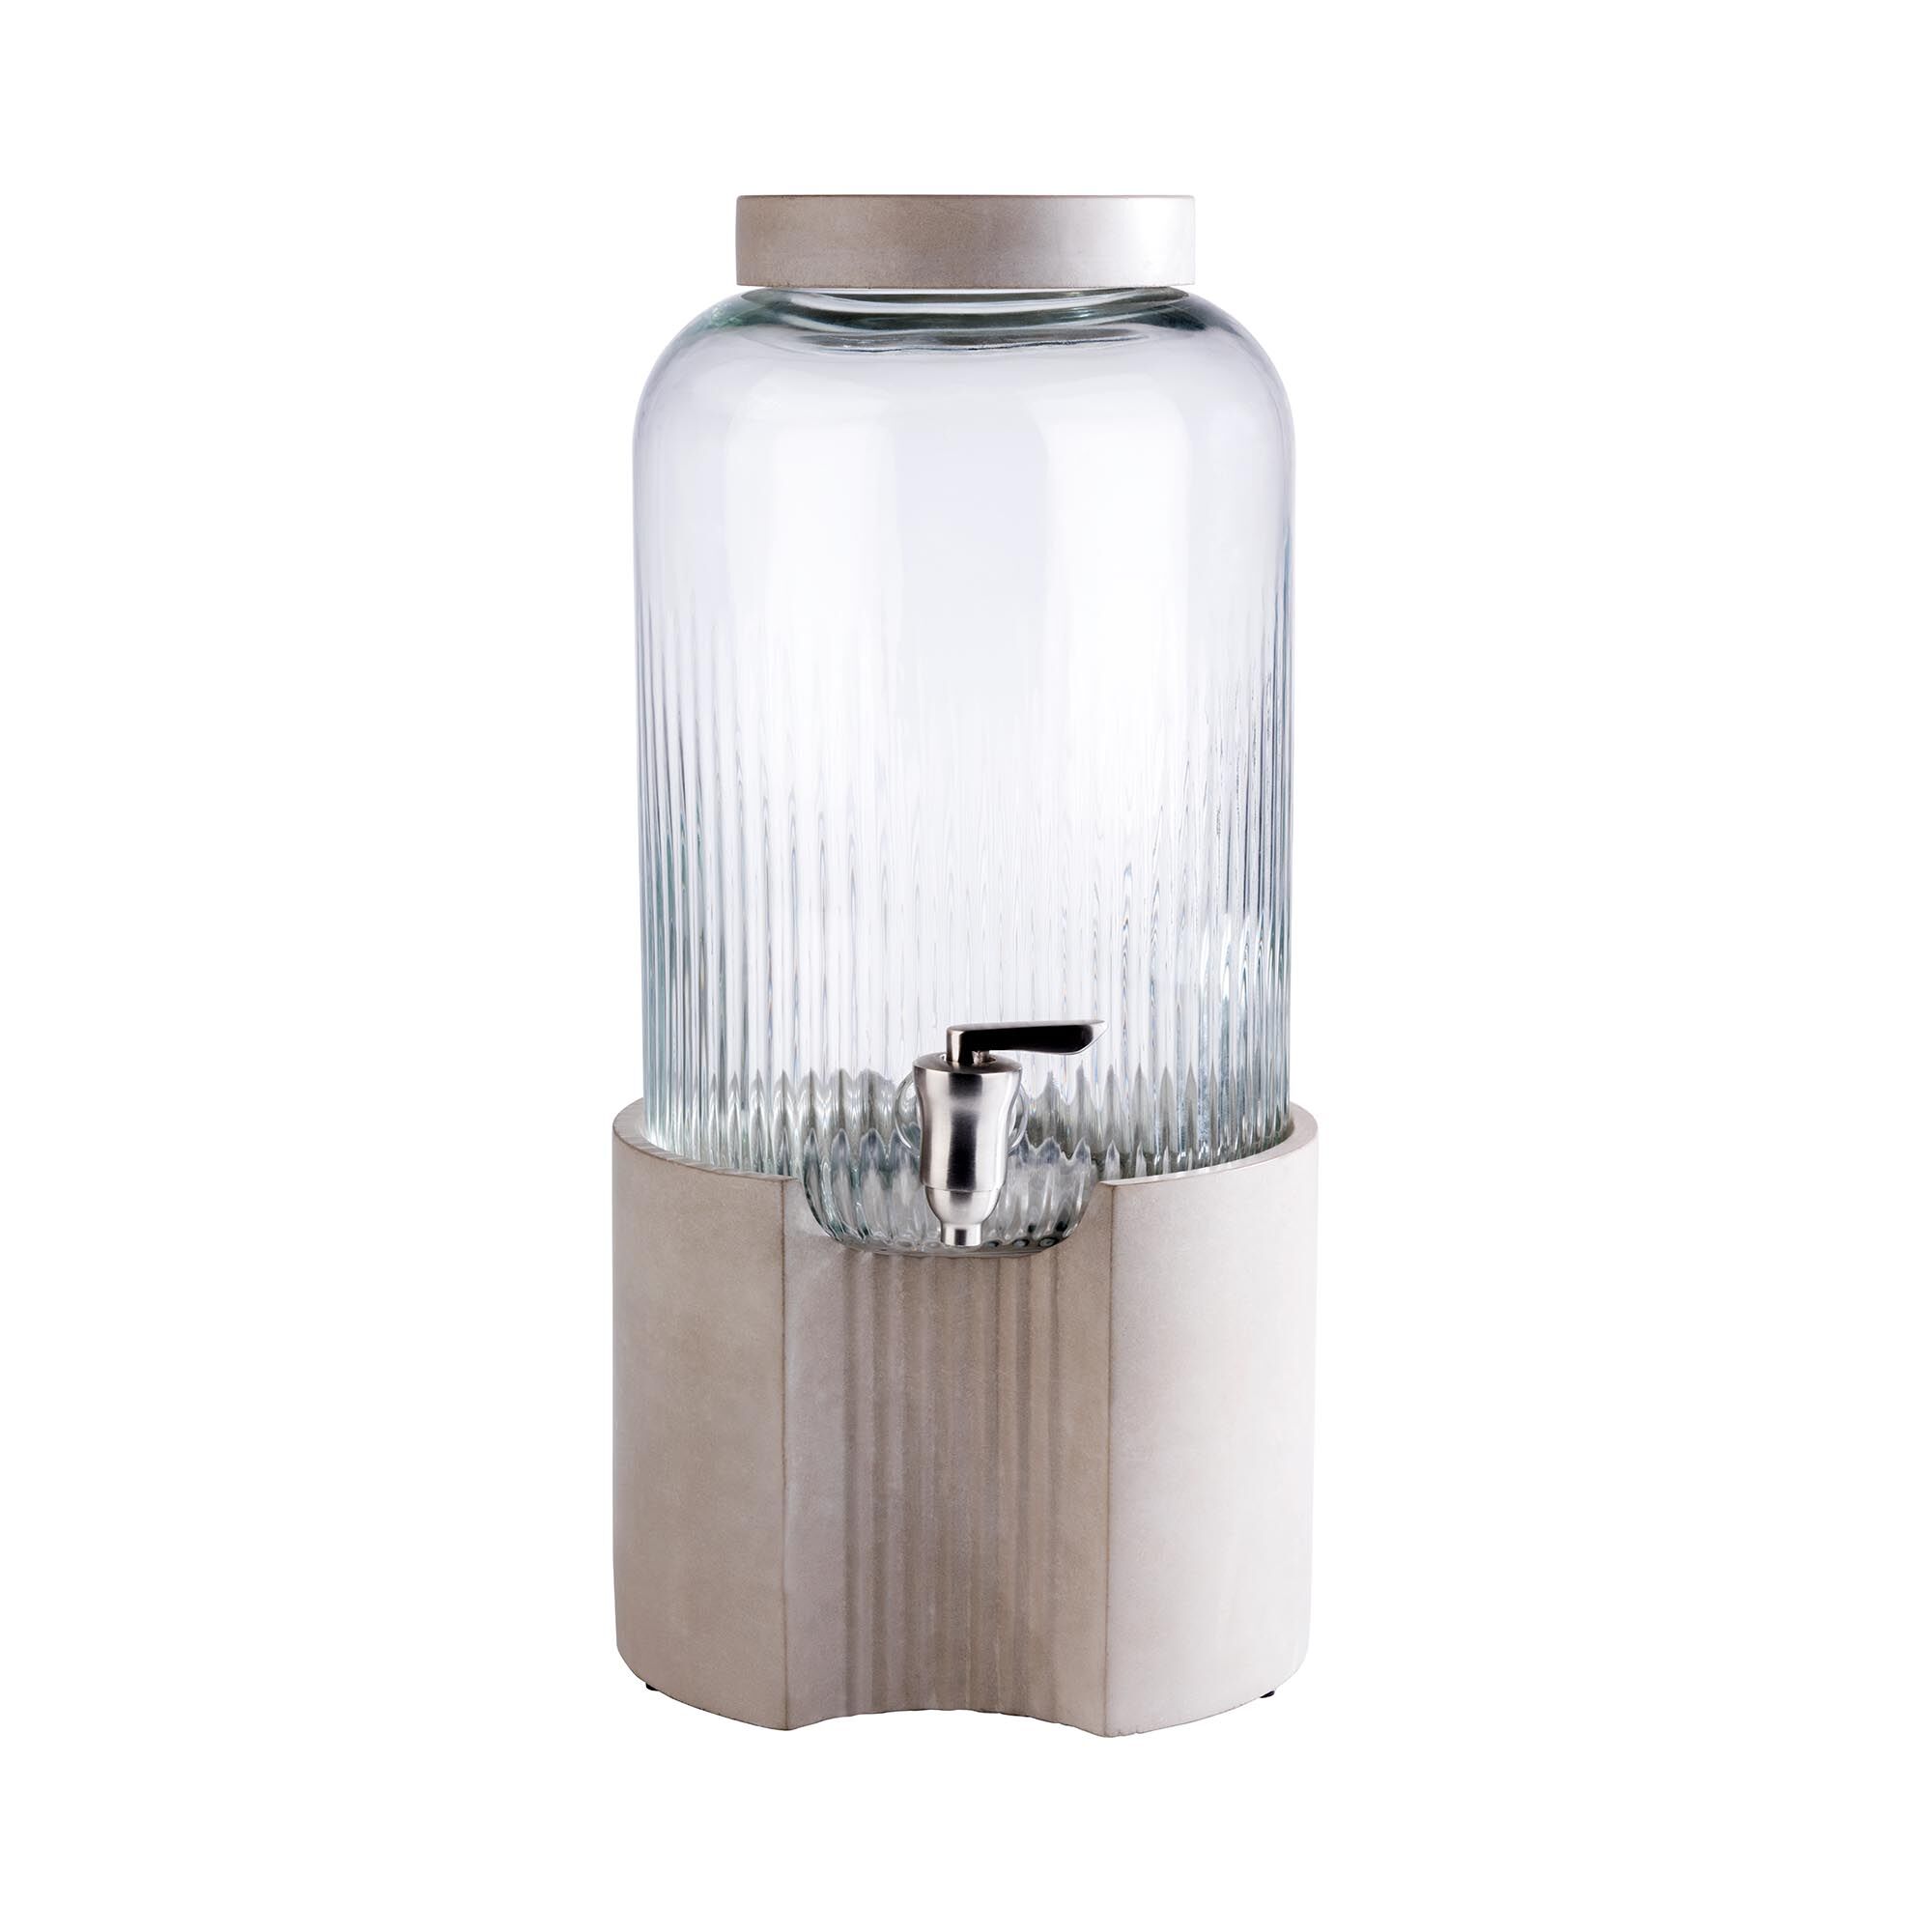 APS Juicedispenser - 7 L - Glass, rustfritt stål, silikon, betong 10410021